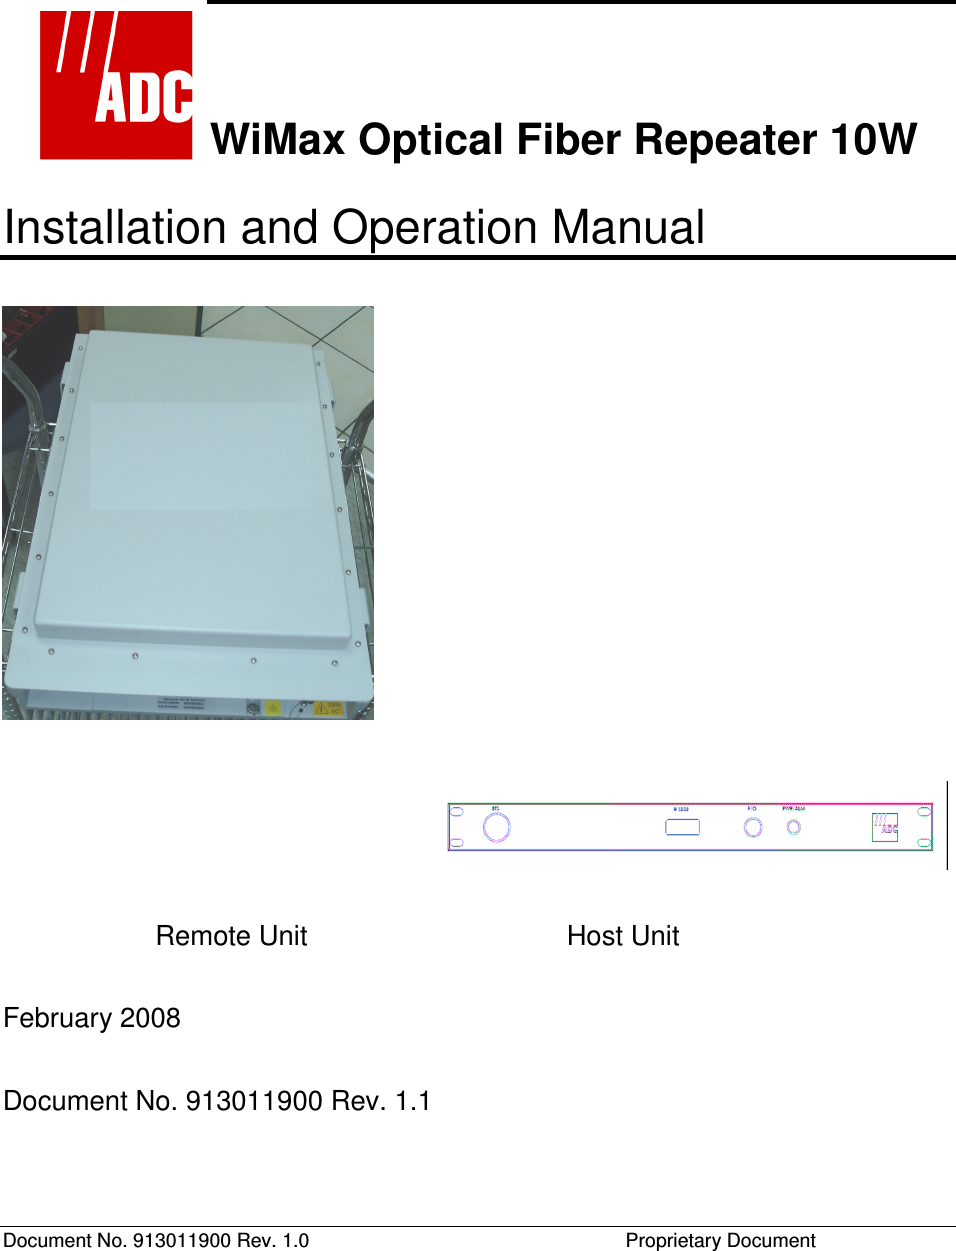  Document No. 913011900 Rev. 1.0    Proprietary Document  WiMax Optical Fiber Repeater 10W Installation and Operation Manual                          Remote Unit        Host Unit   February 2008 Document No. 913011900 Rev. 1.1 